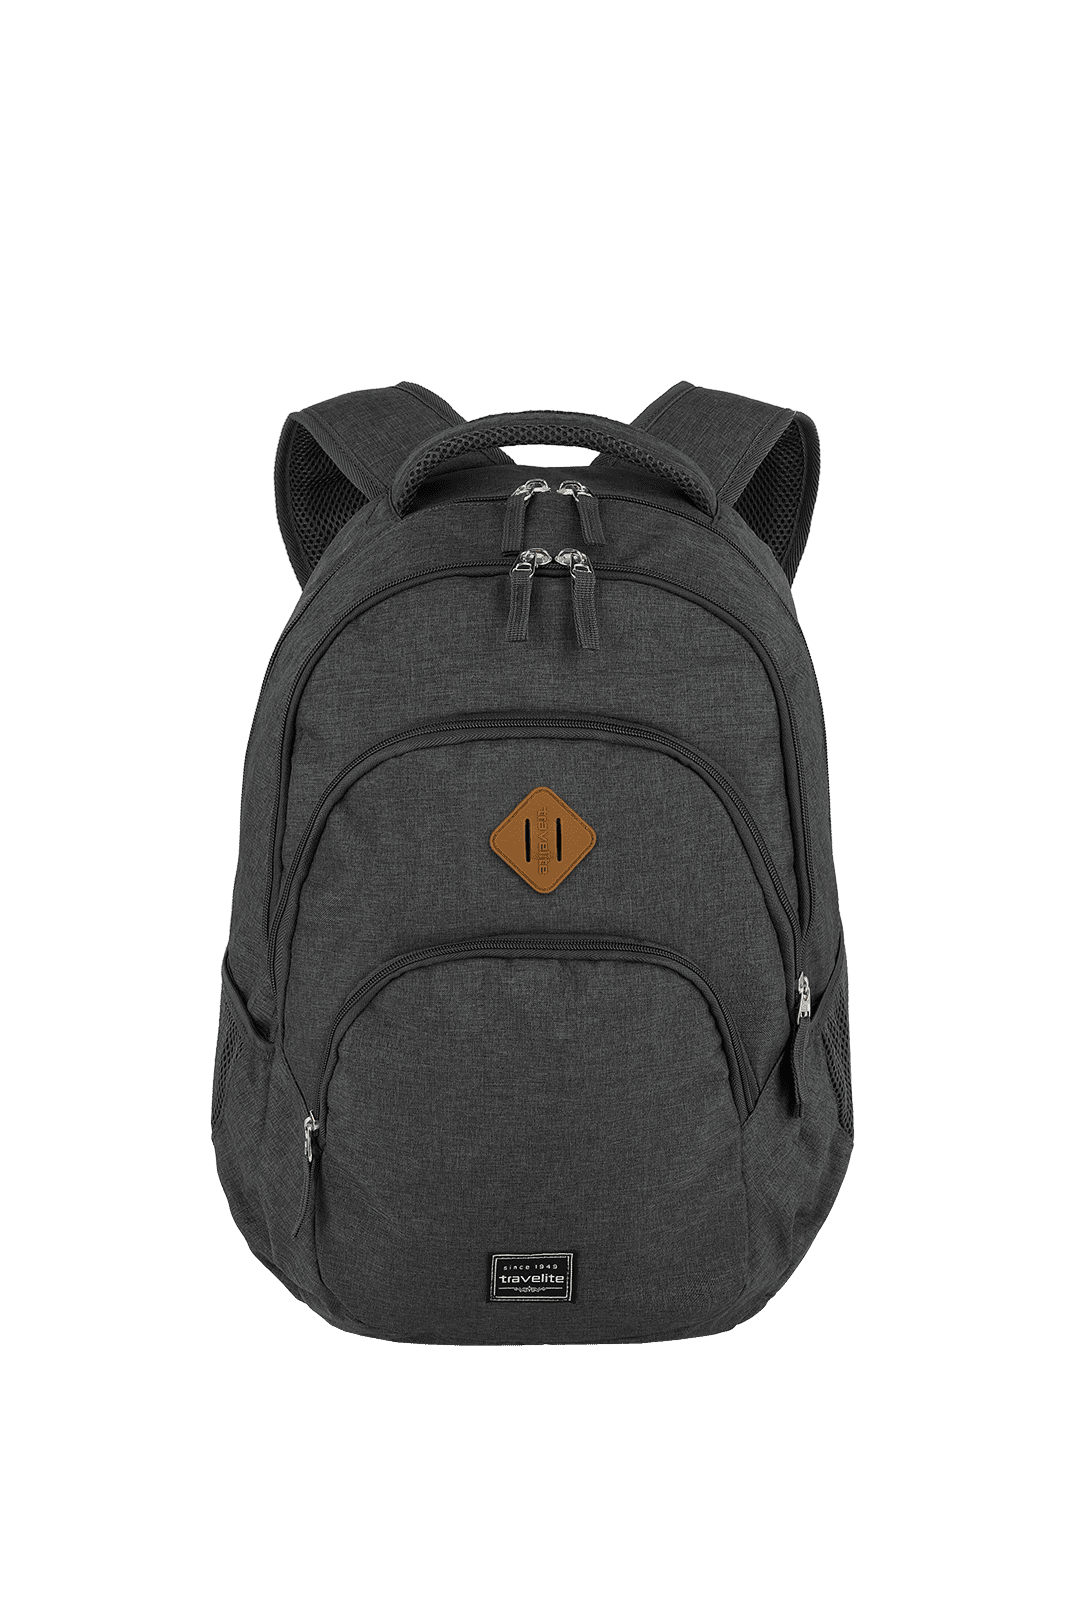 maaien Postcode Ouderling BASICS backpack in anthracite - travelite